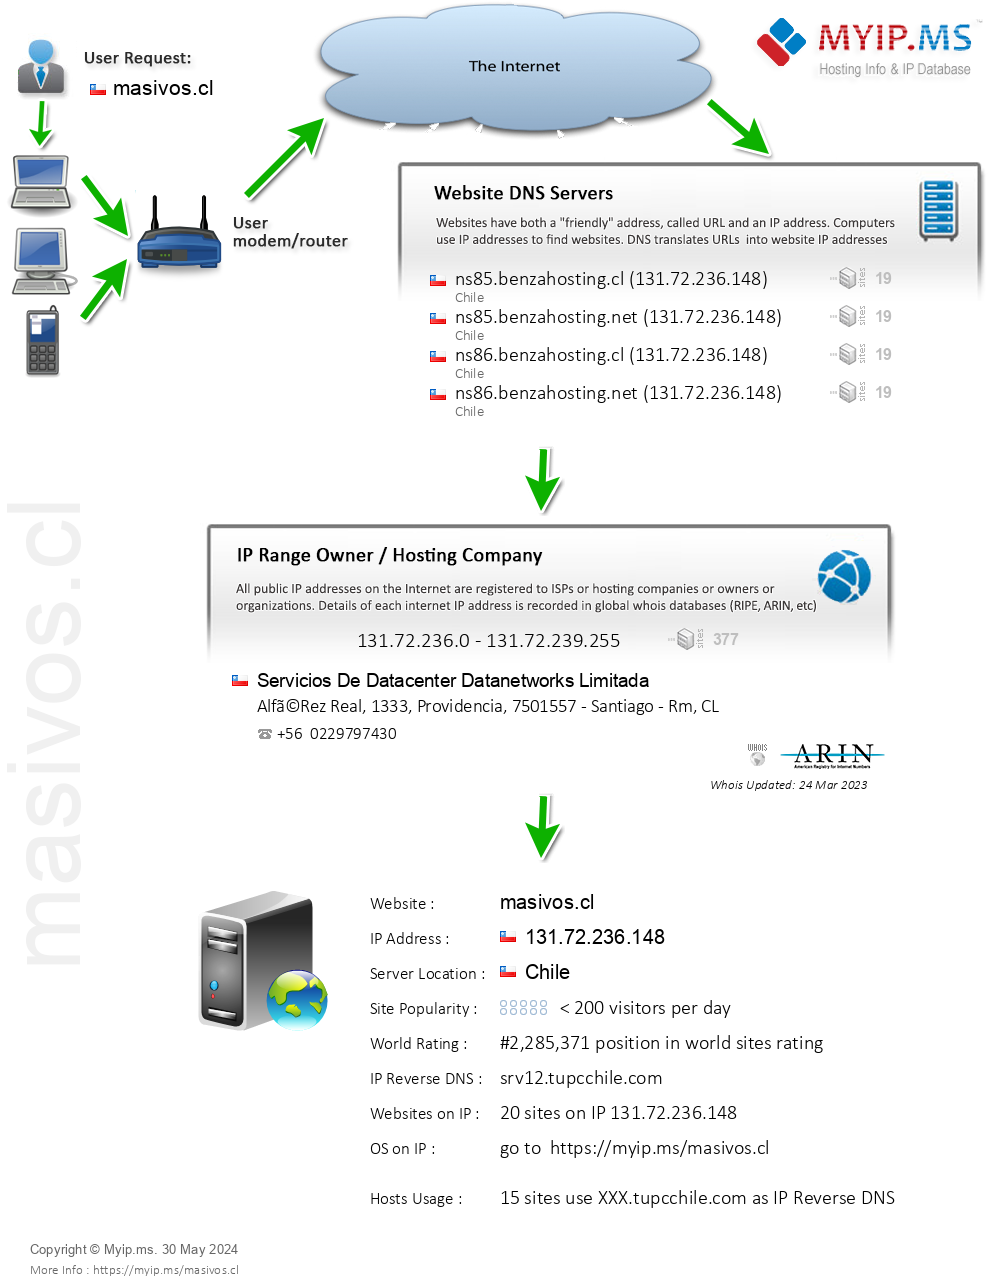 Masivos.cl - Website Hosting Visual IP Diagram